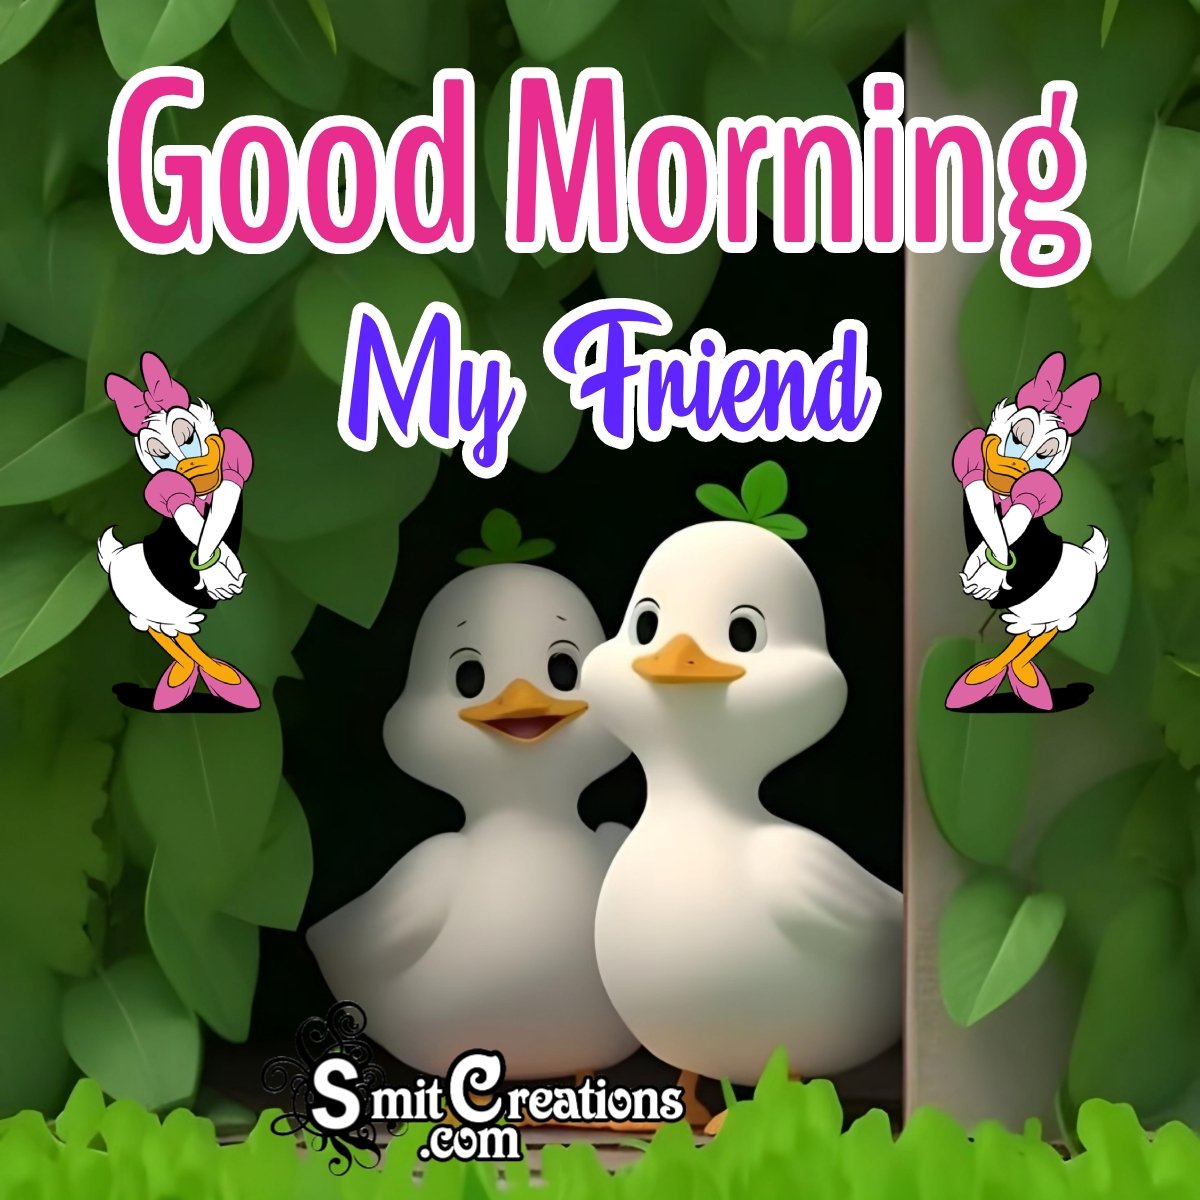 Good Morning My Friend